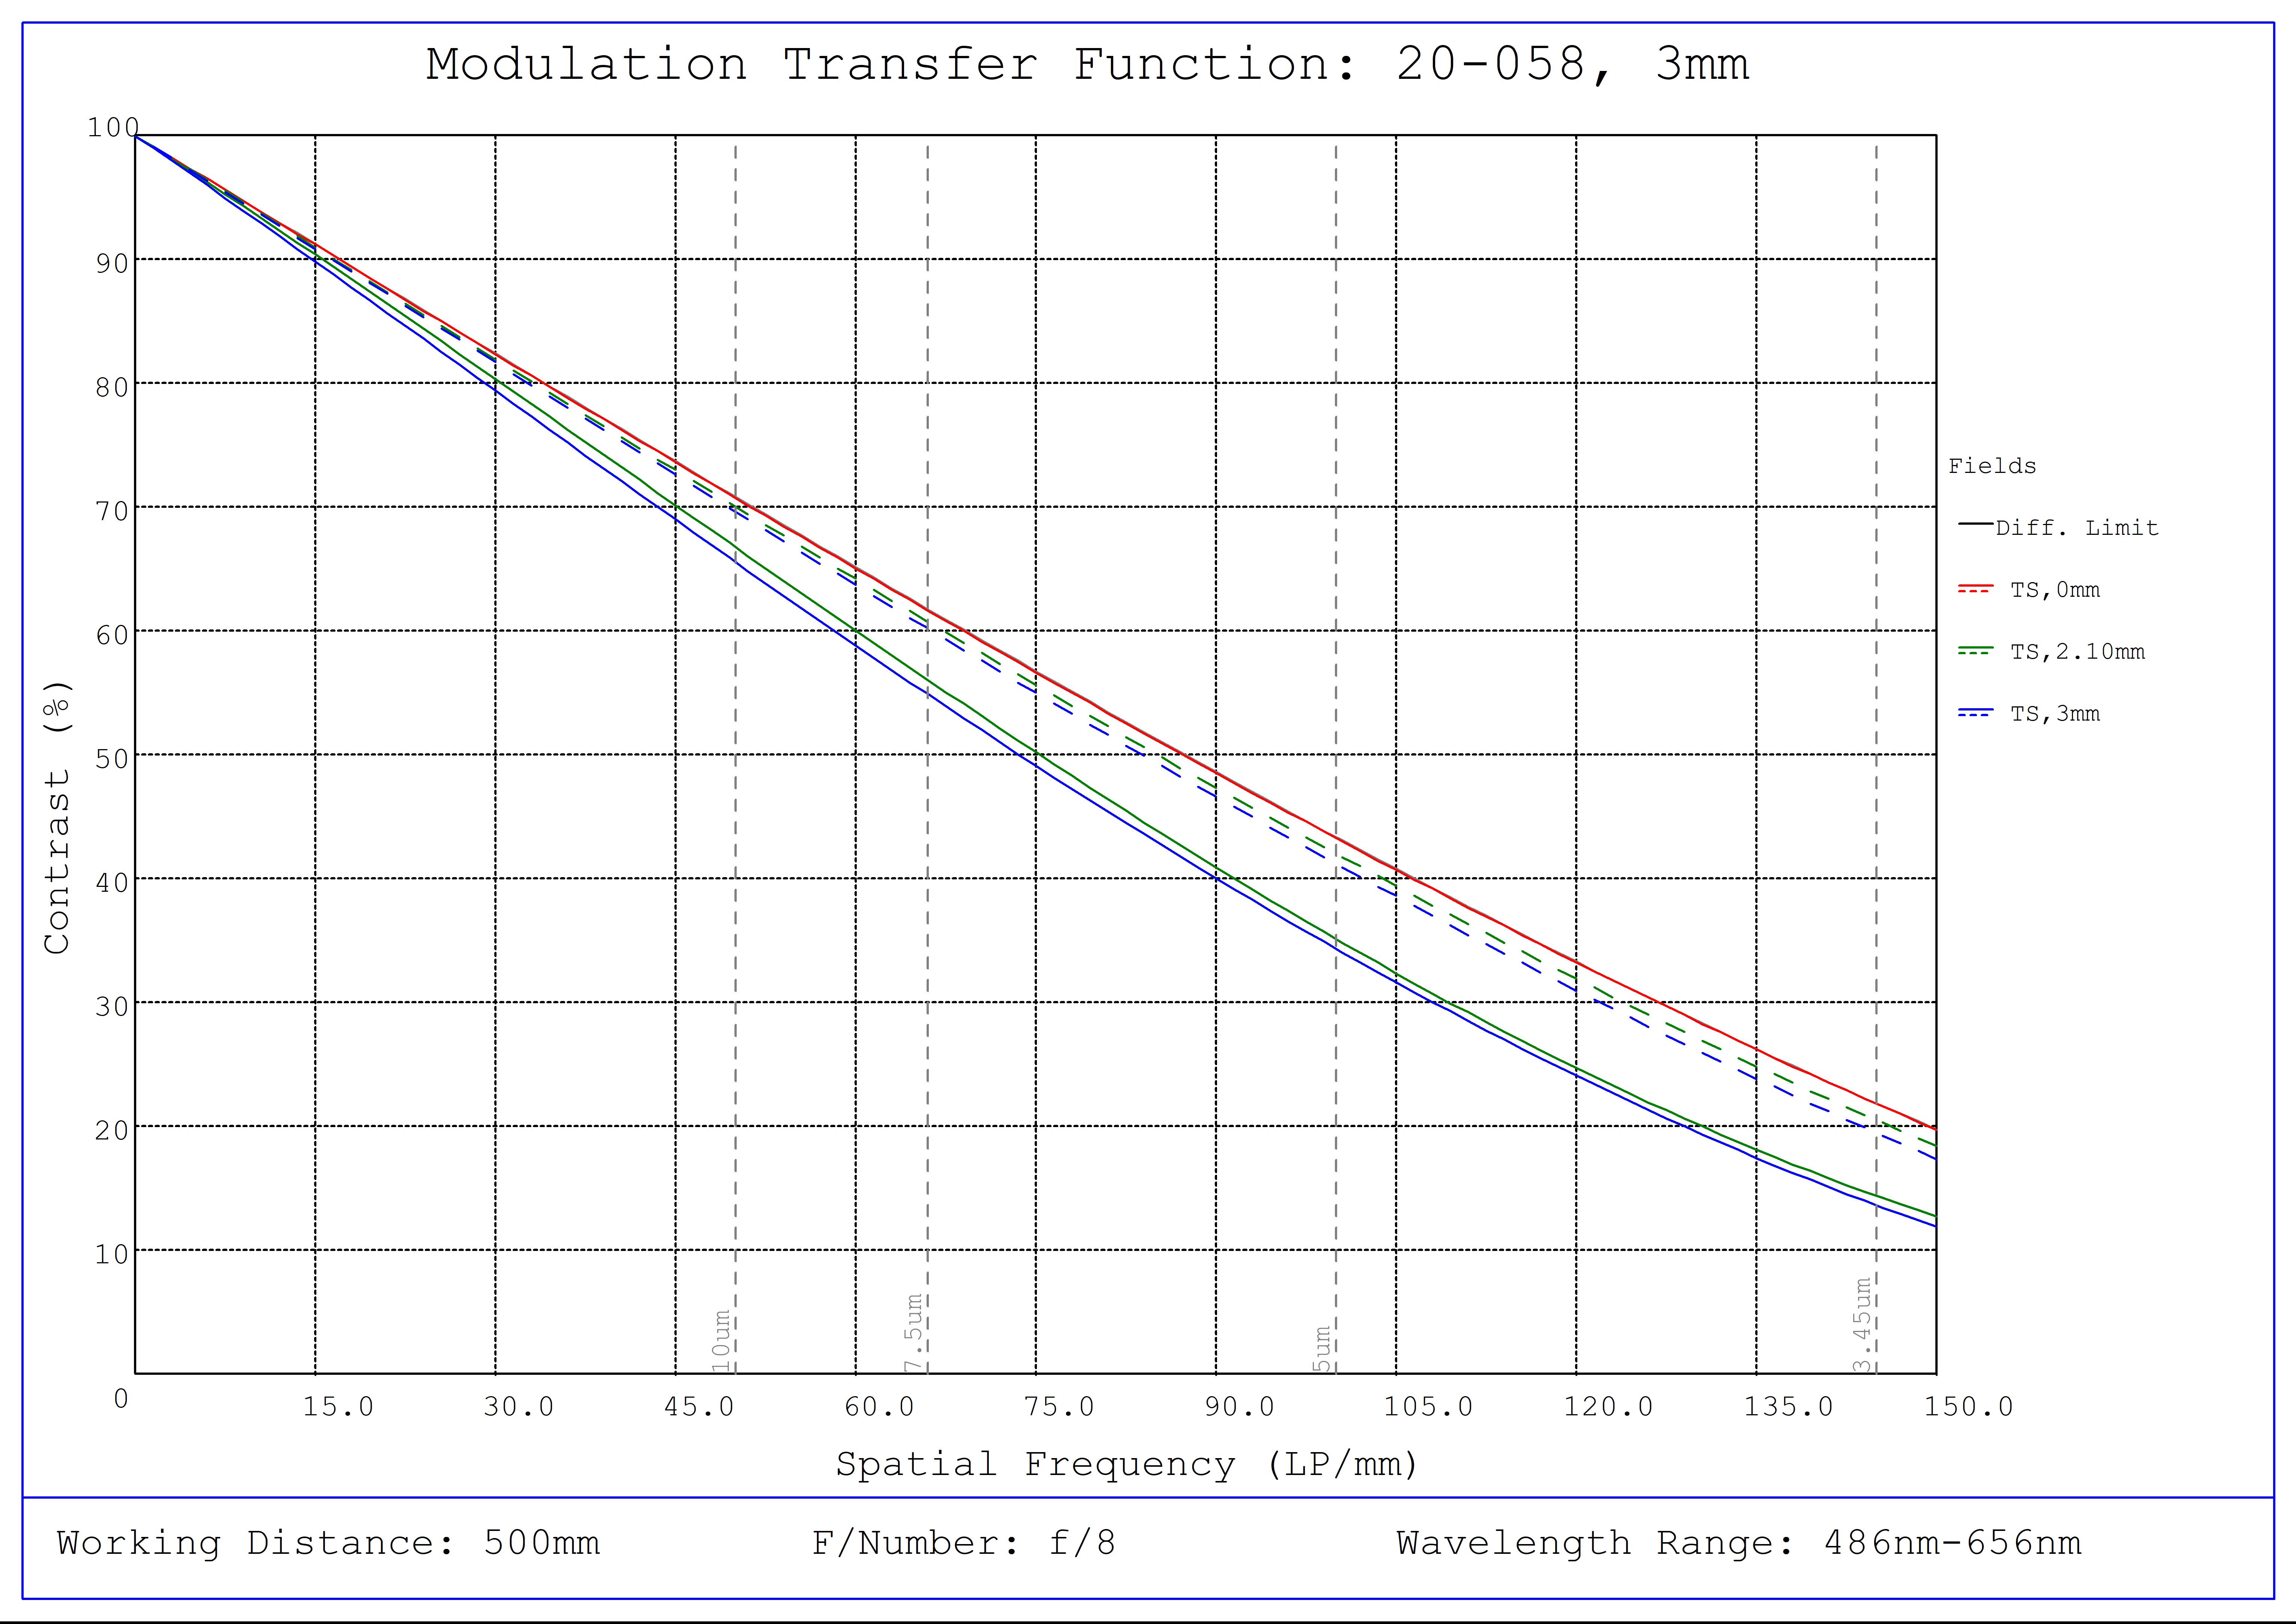 #20-058, 3mm FL f/8.0, IR-Cut Blue Series M12 Lens, Modulated Transfer Function (MTF) Plot, 500mm Working Distance, f8